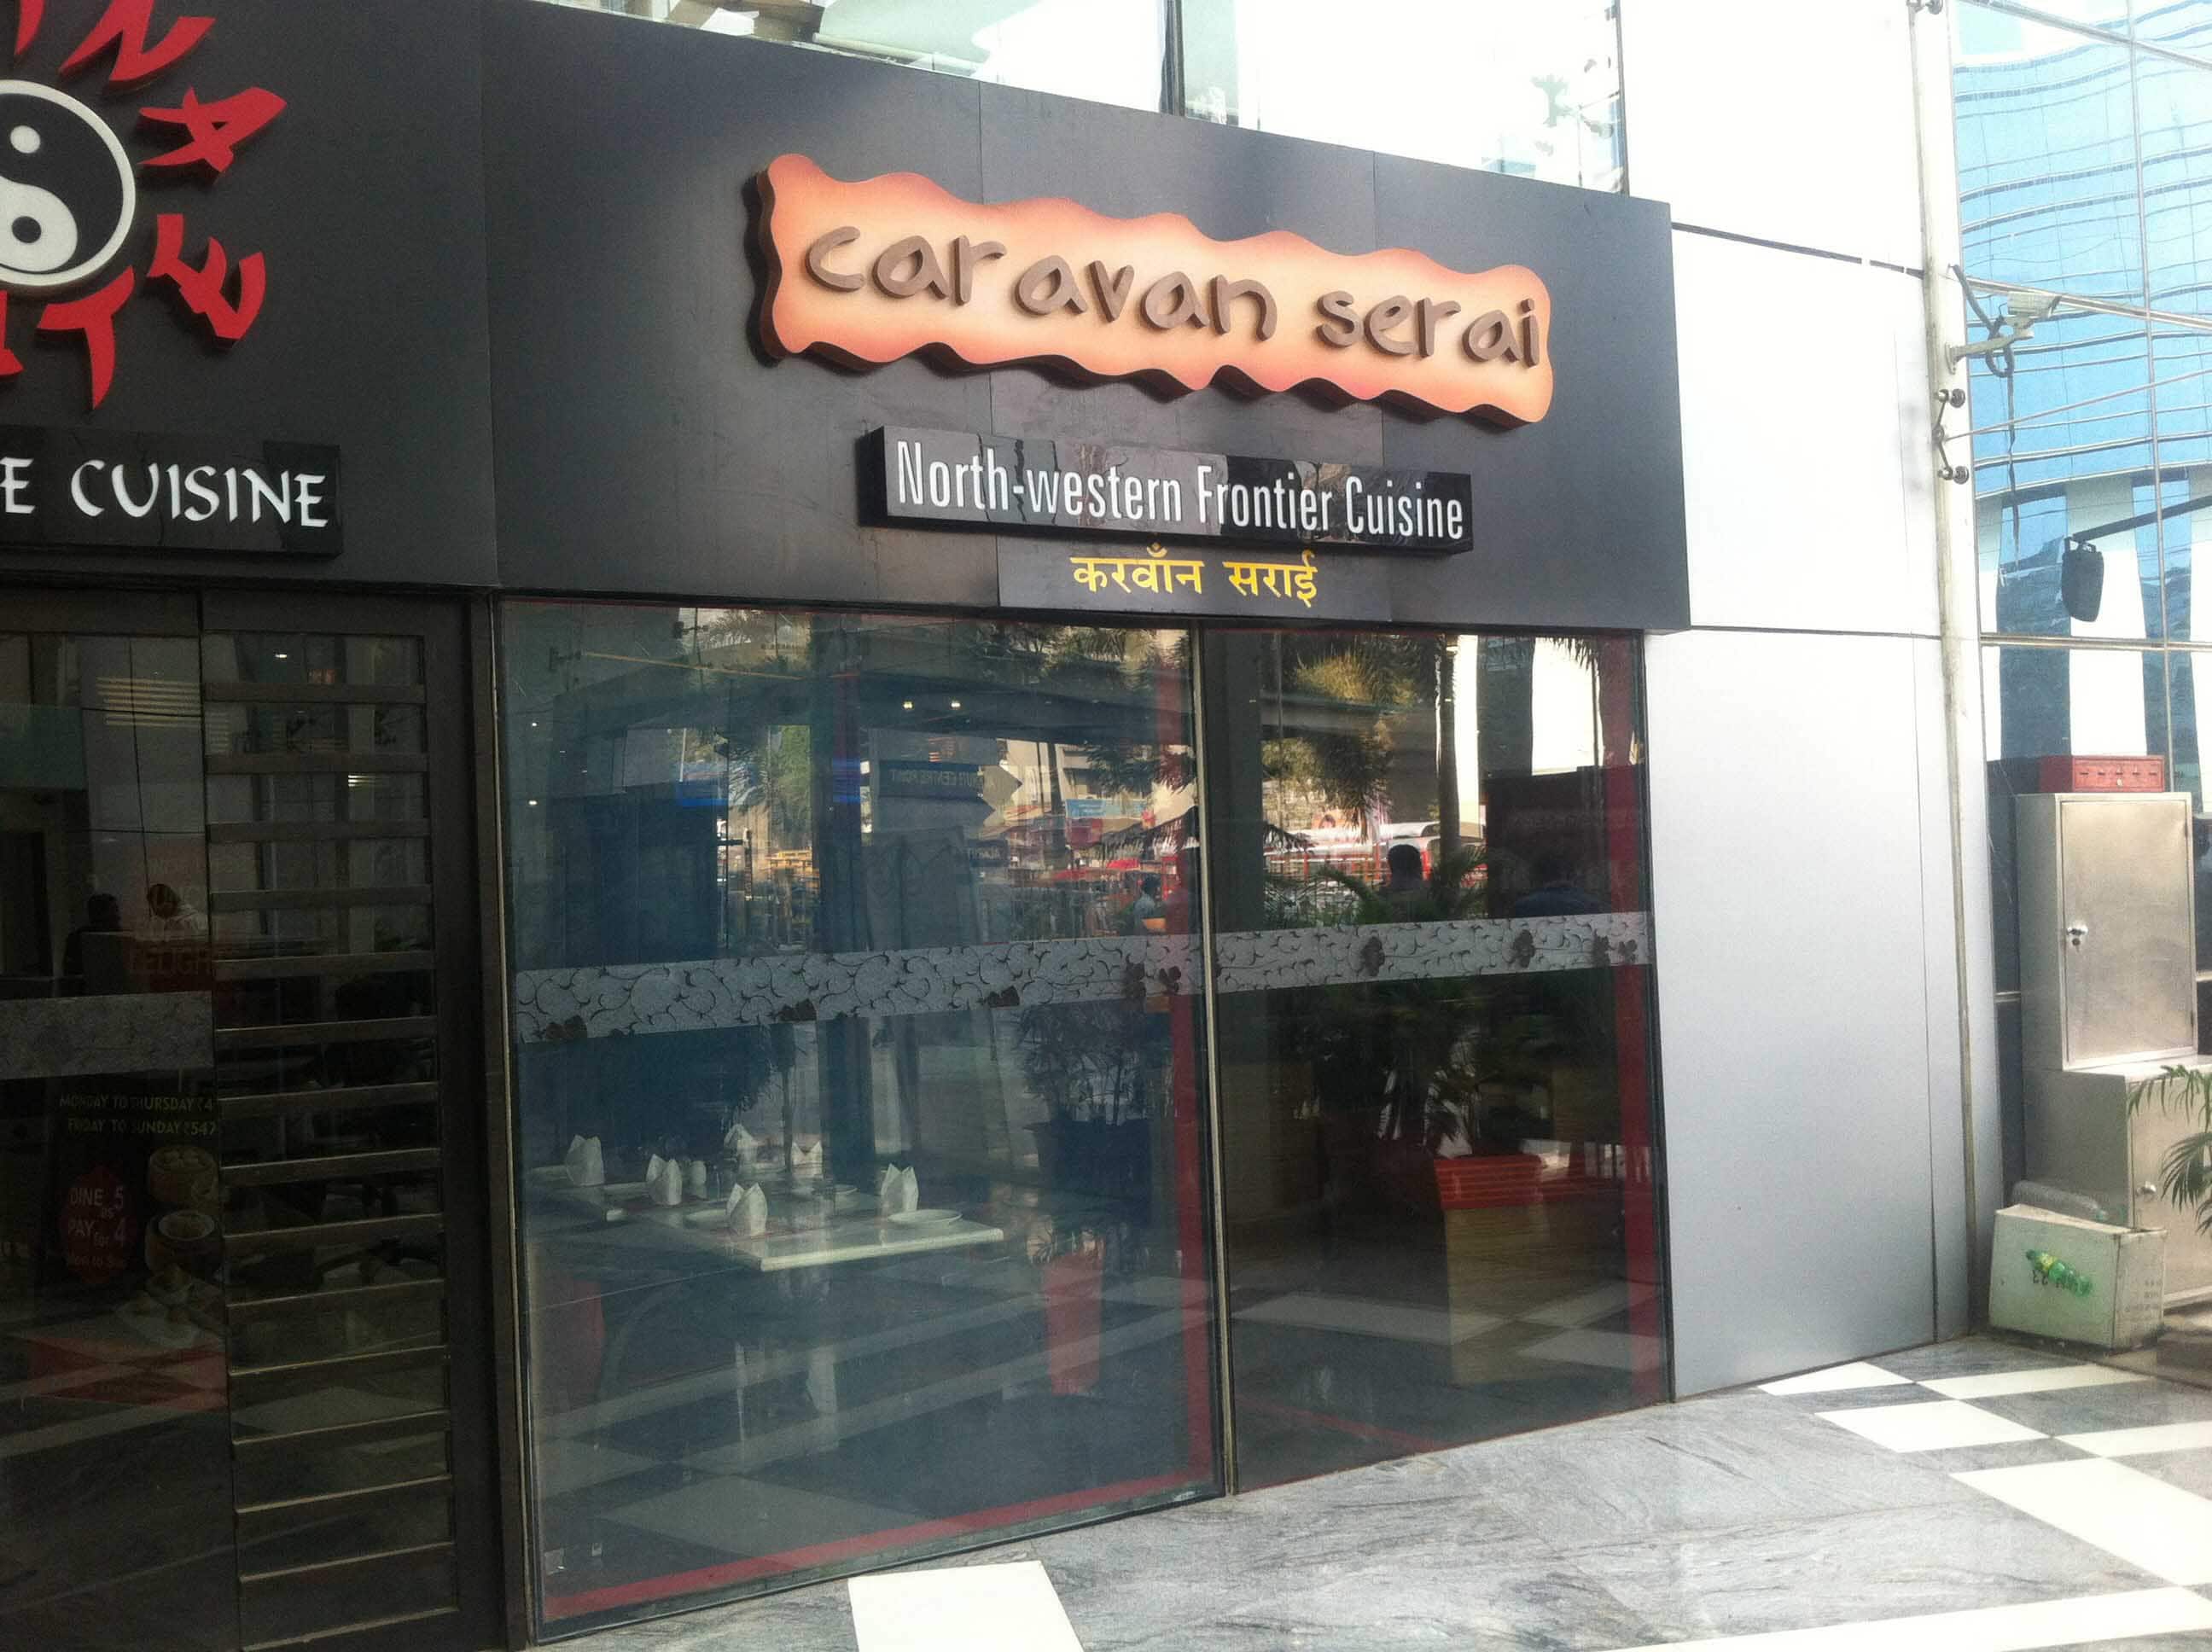 Photos of Caravan Serai, Pictures of Caravan Serai, Mumbai | Zomato